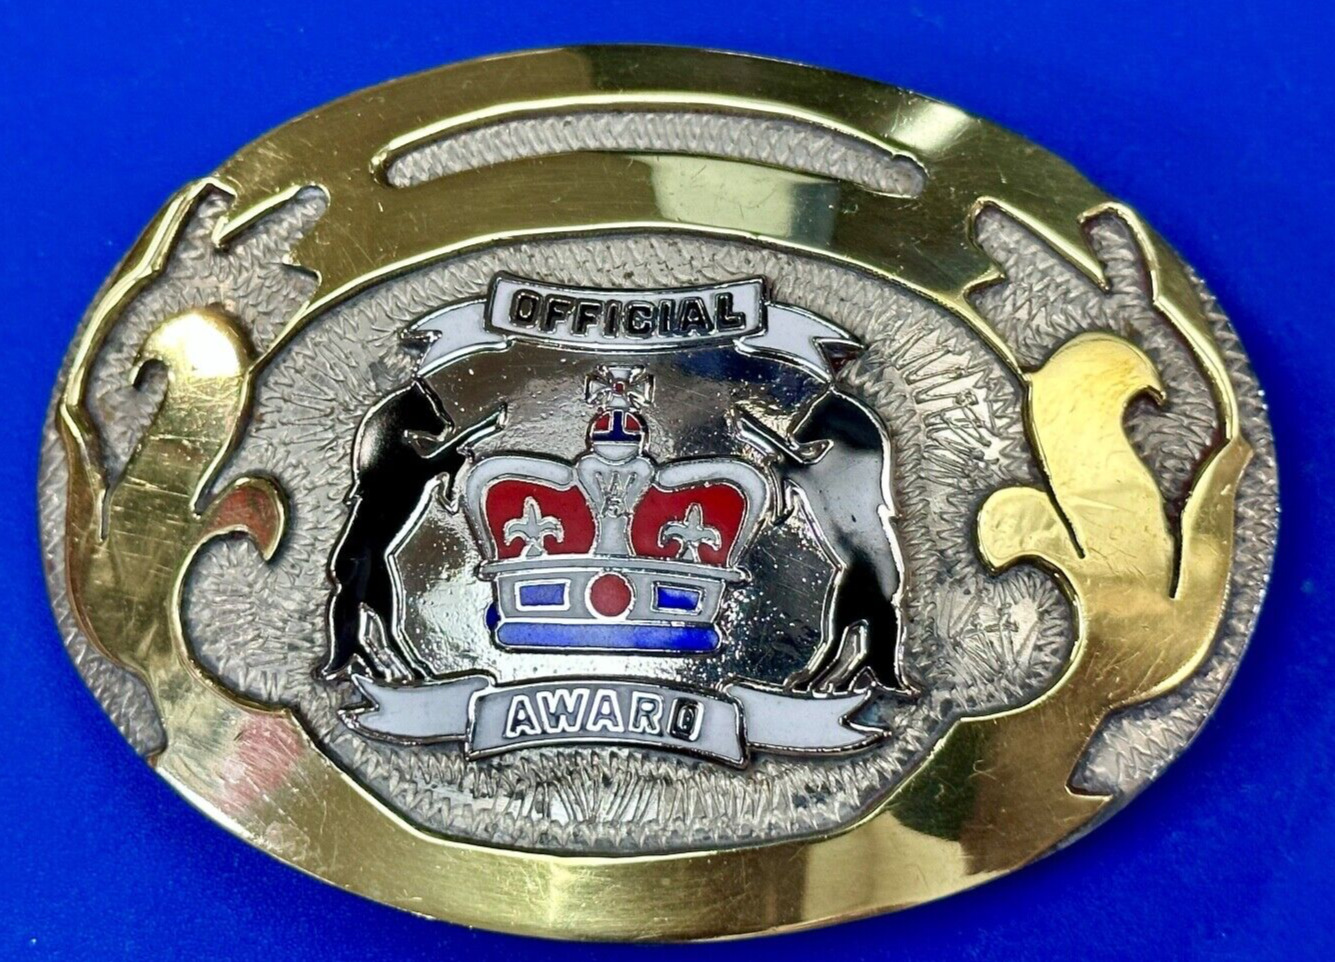 Official Award - Crown western rodeo trophy vintage belt buckle  to engrave